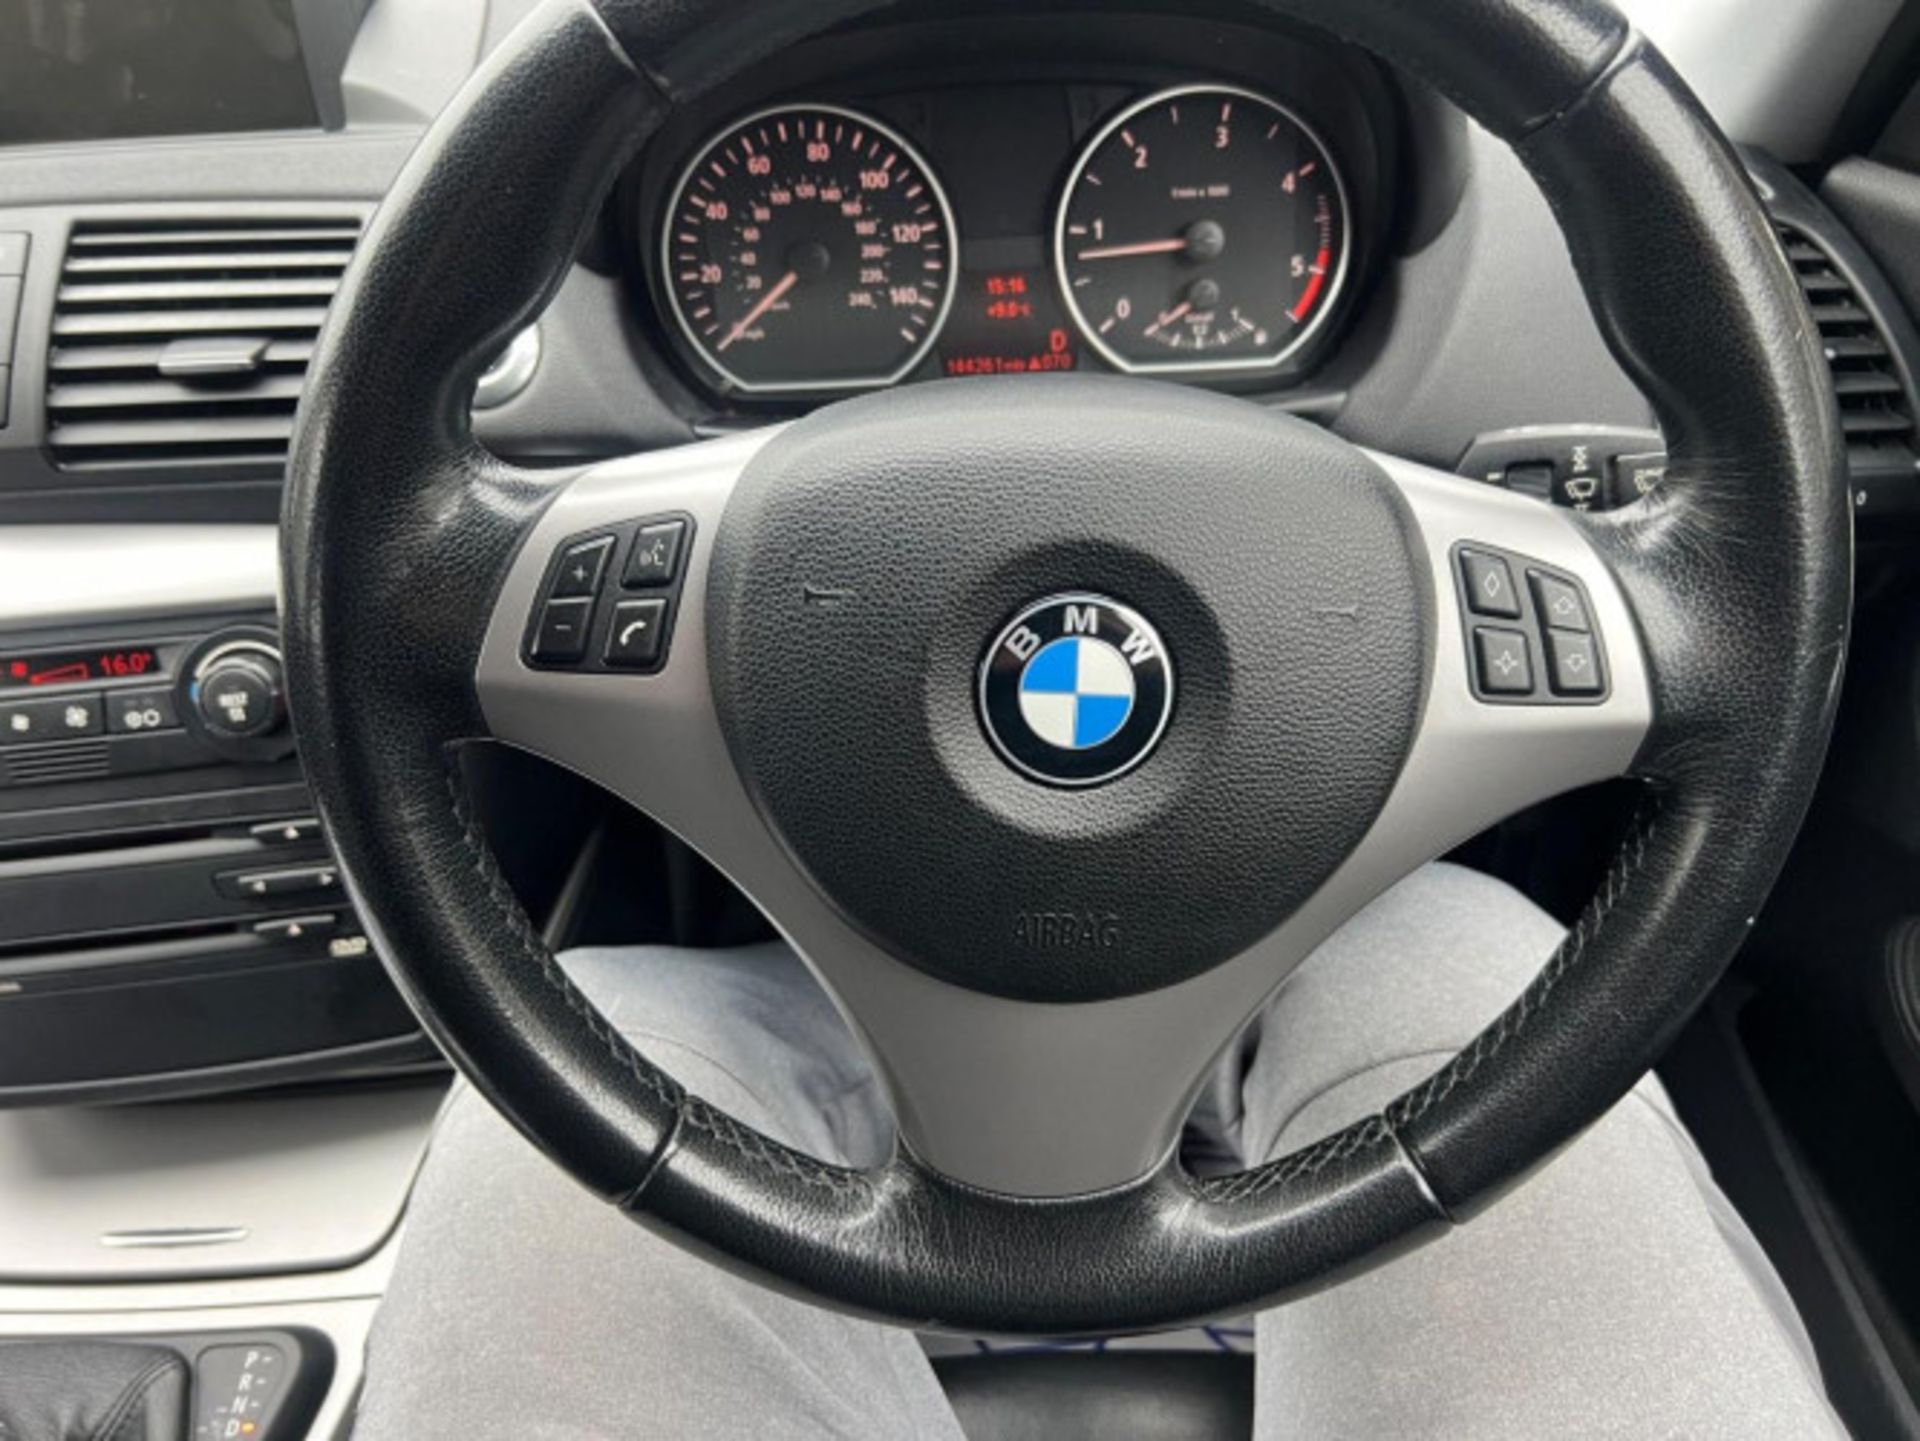 BMW 1 SERIES 2.0 120D SE STEPTRONIC - STYLE, PERFORMANCE >>--NO VAT ON HAMMER--<< - Image 67 of 91